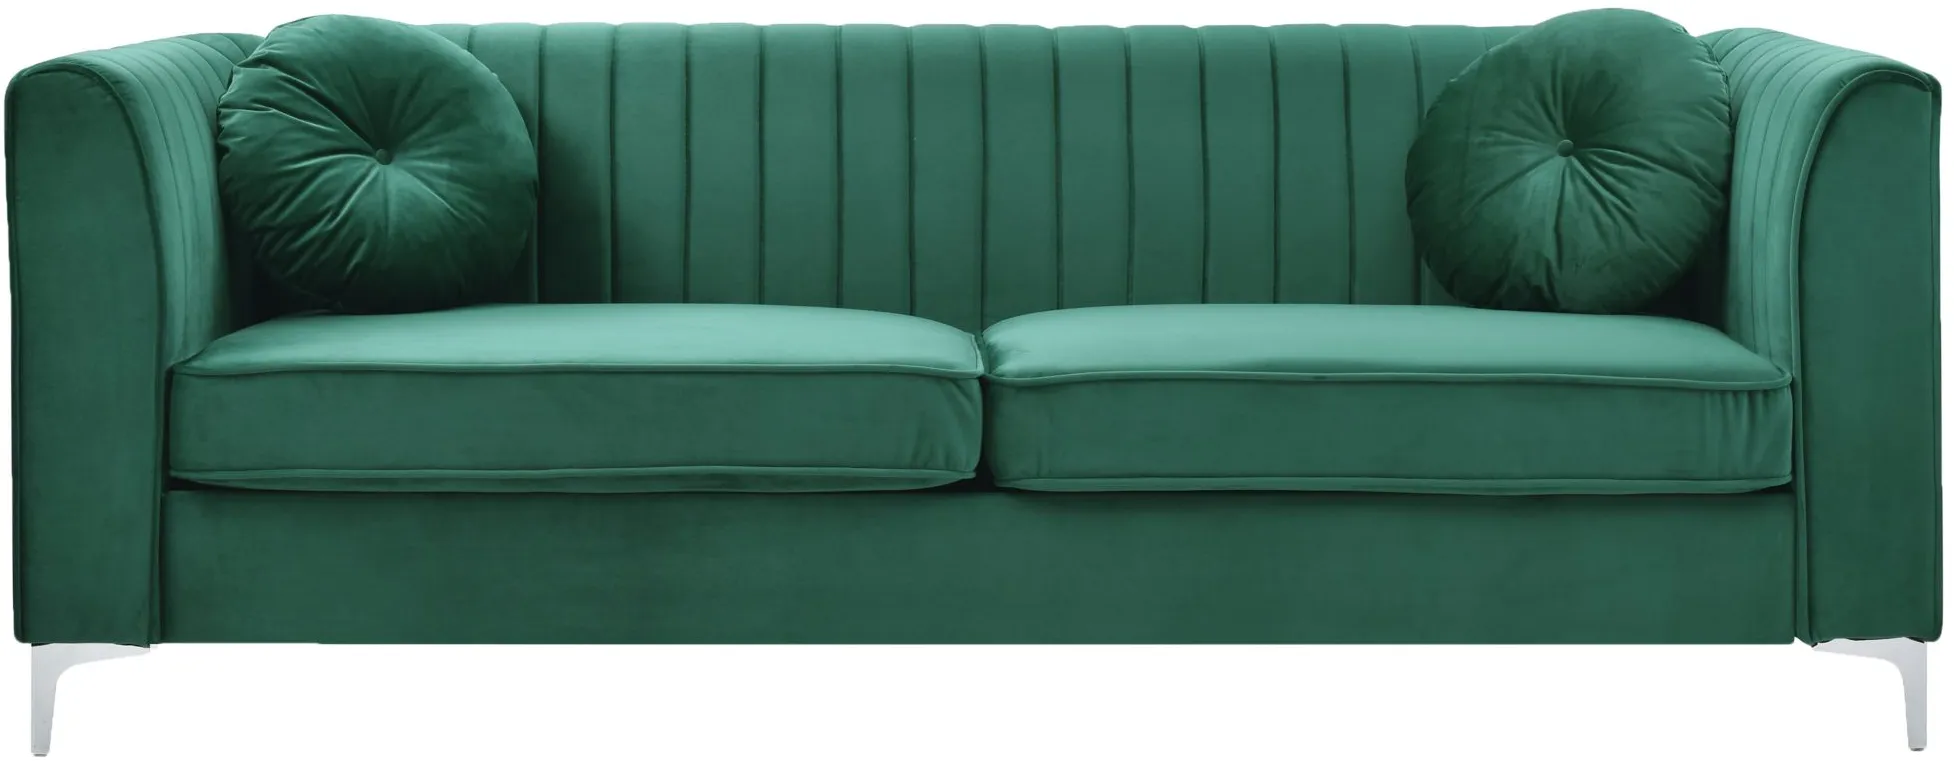 Deltona Sofa in Green by Glory Furniture